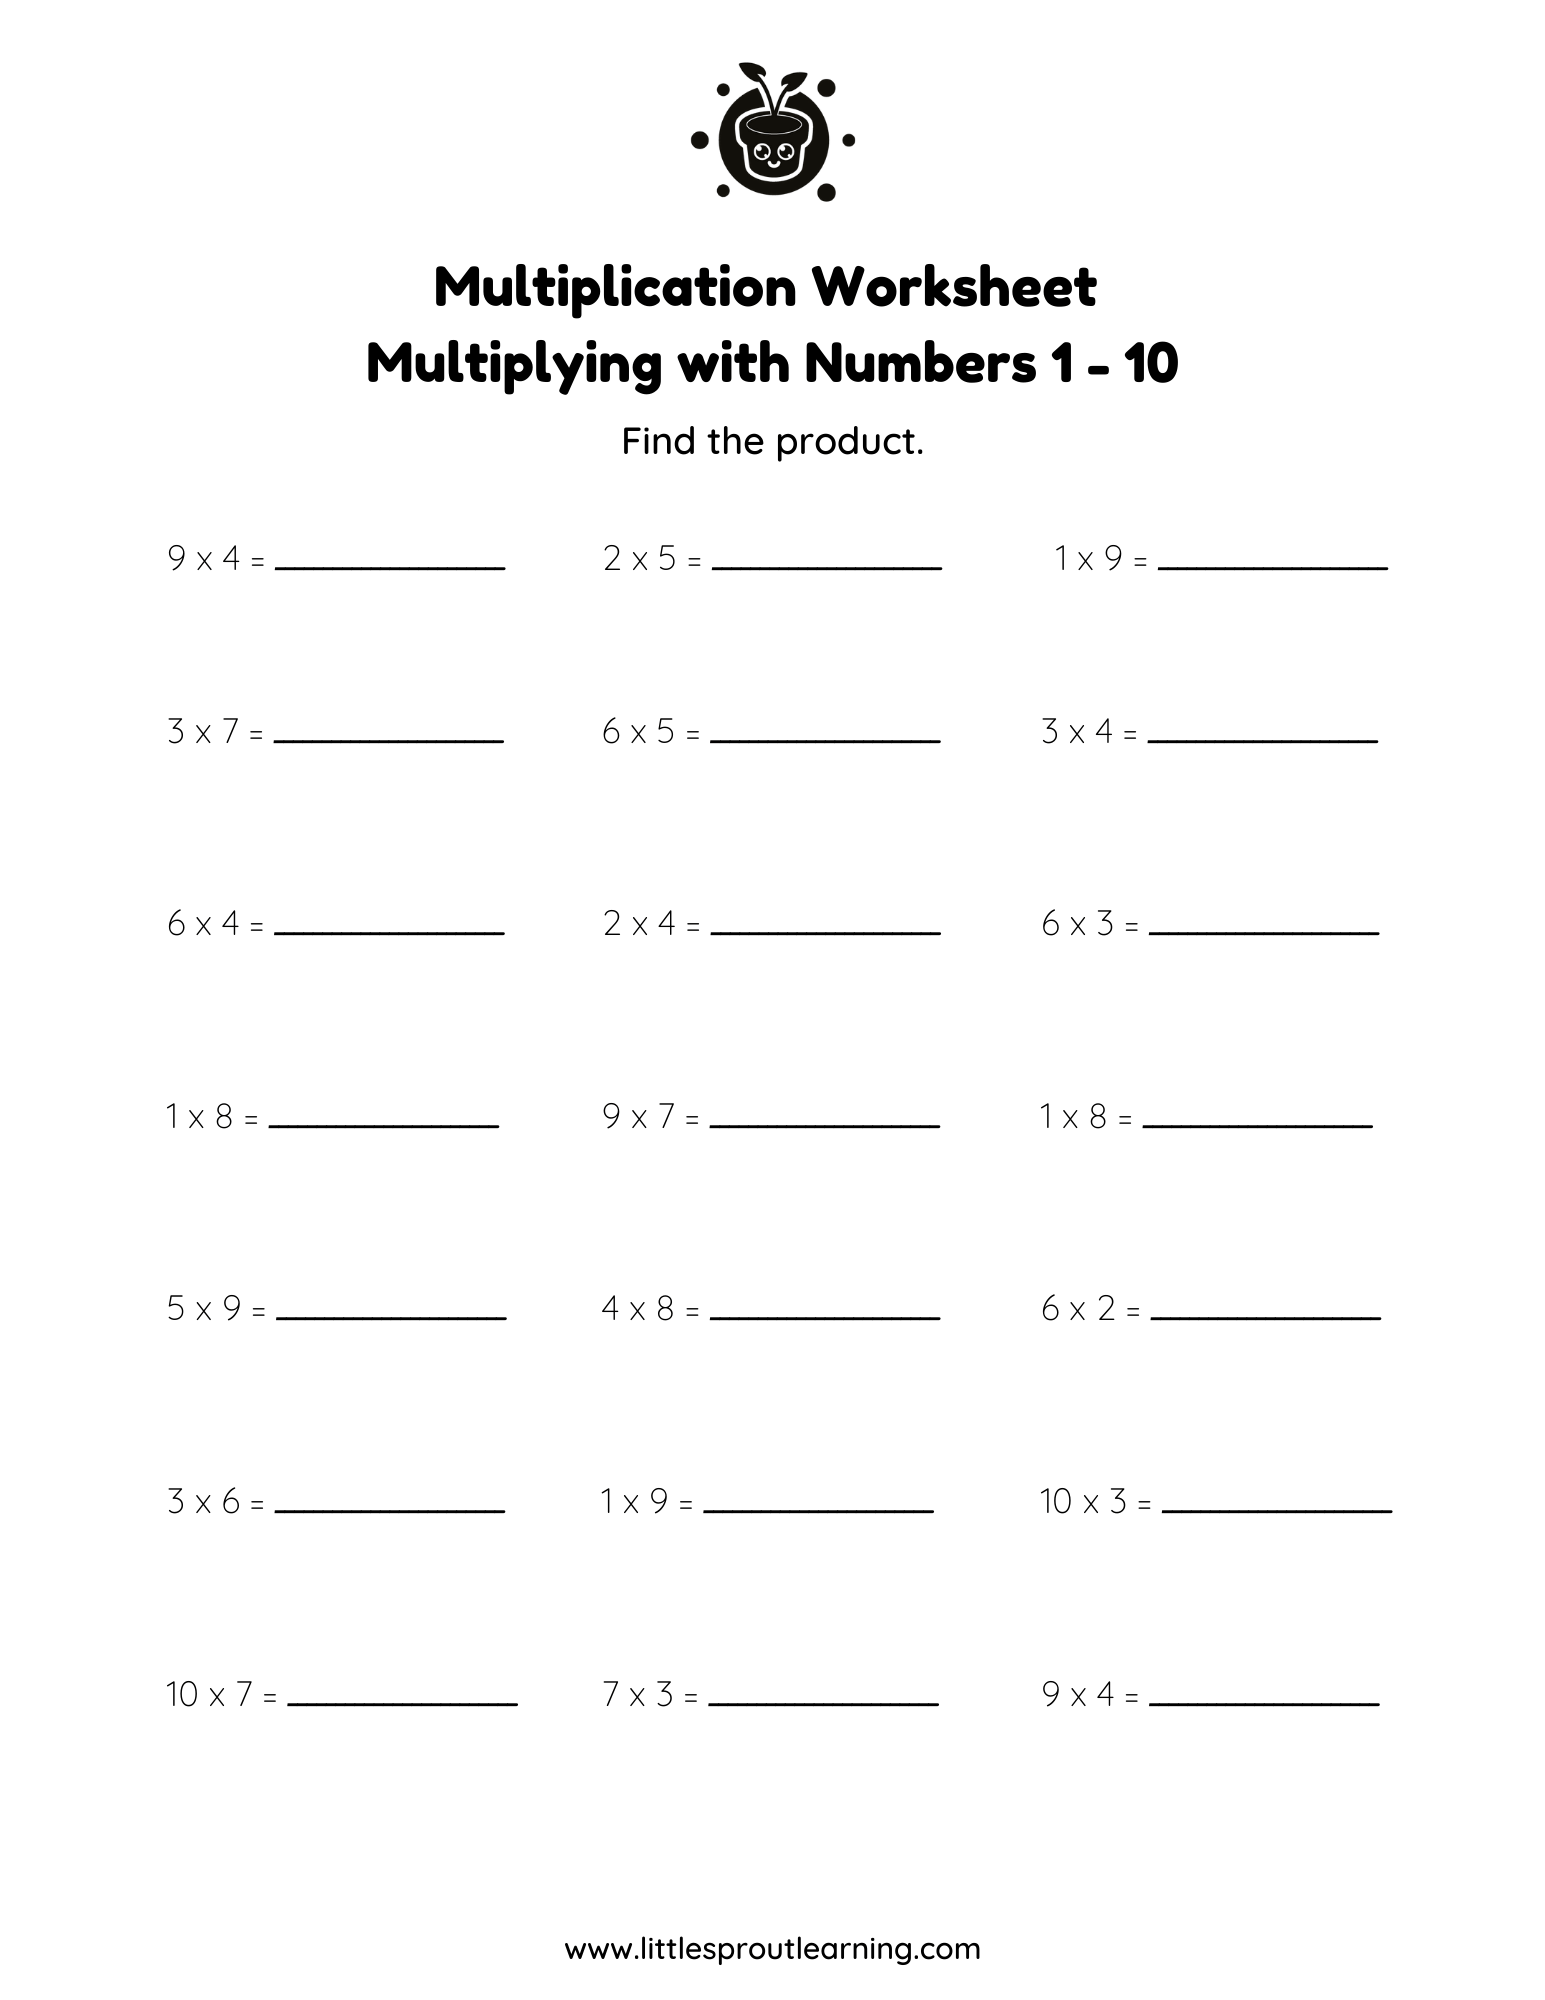 Multiplication Worksheet – Multiplying with Numbers 1 – 10